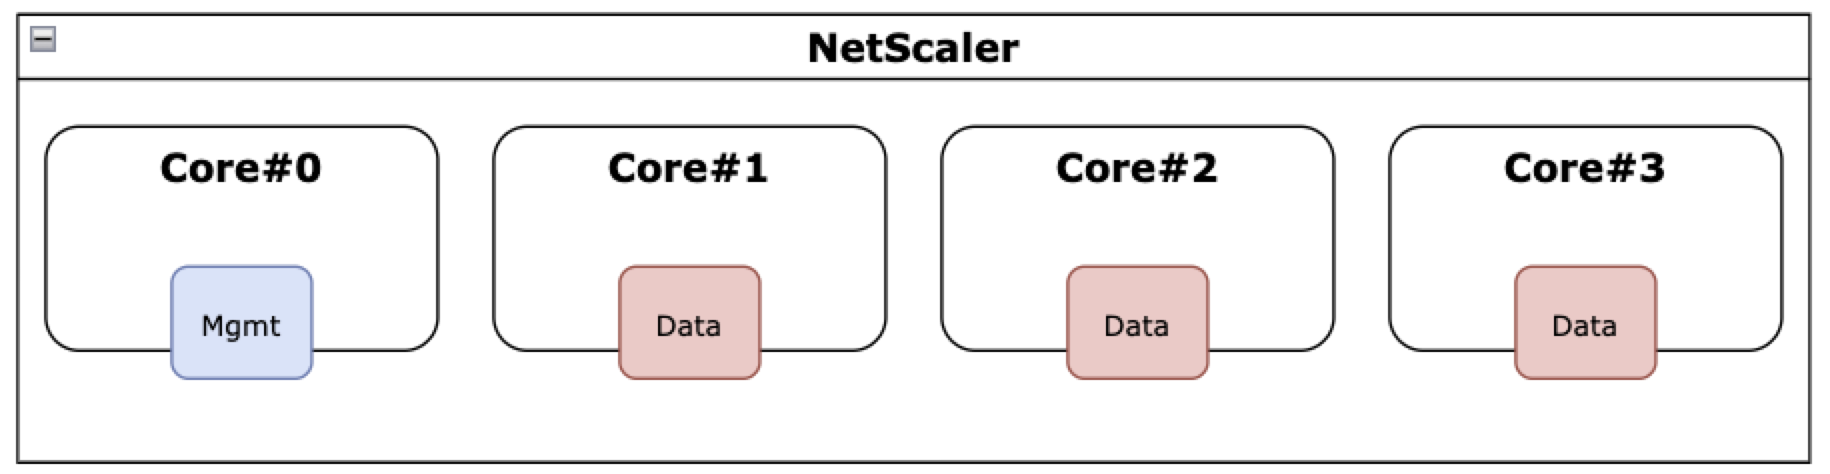 NetScaler ohne SMT-Funktion